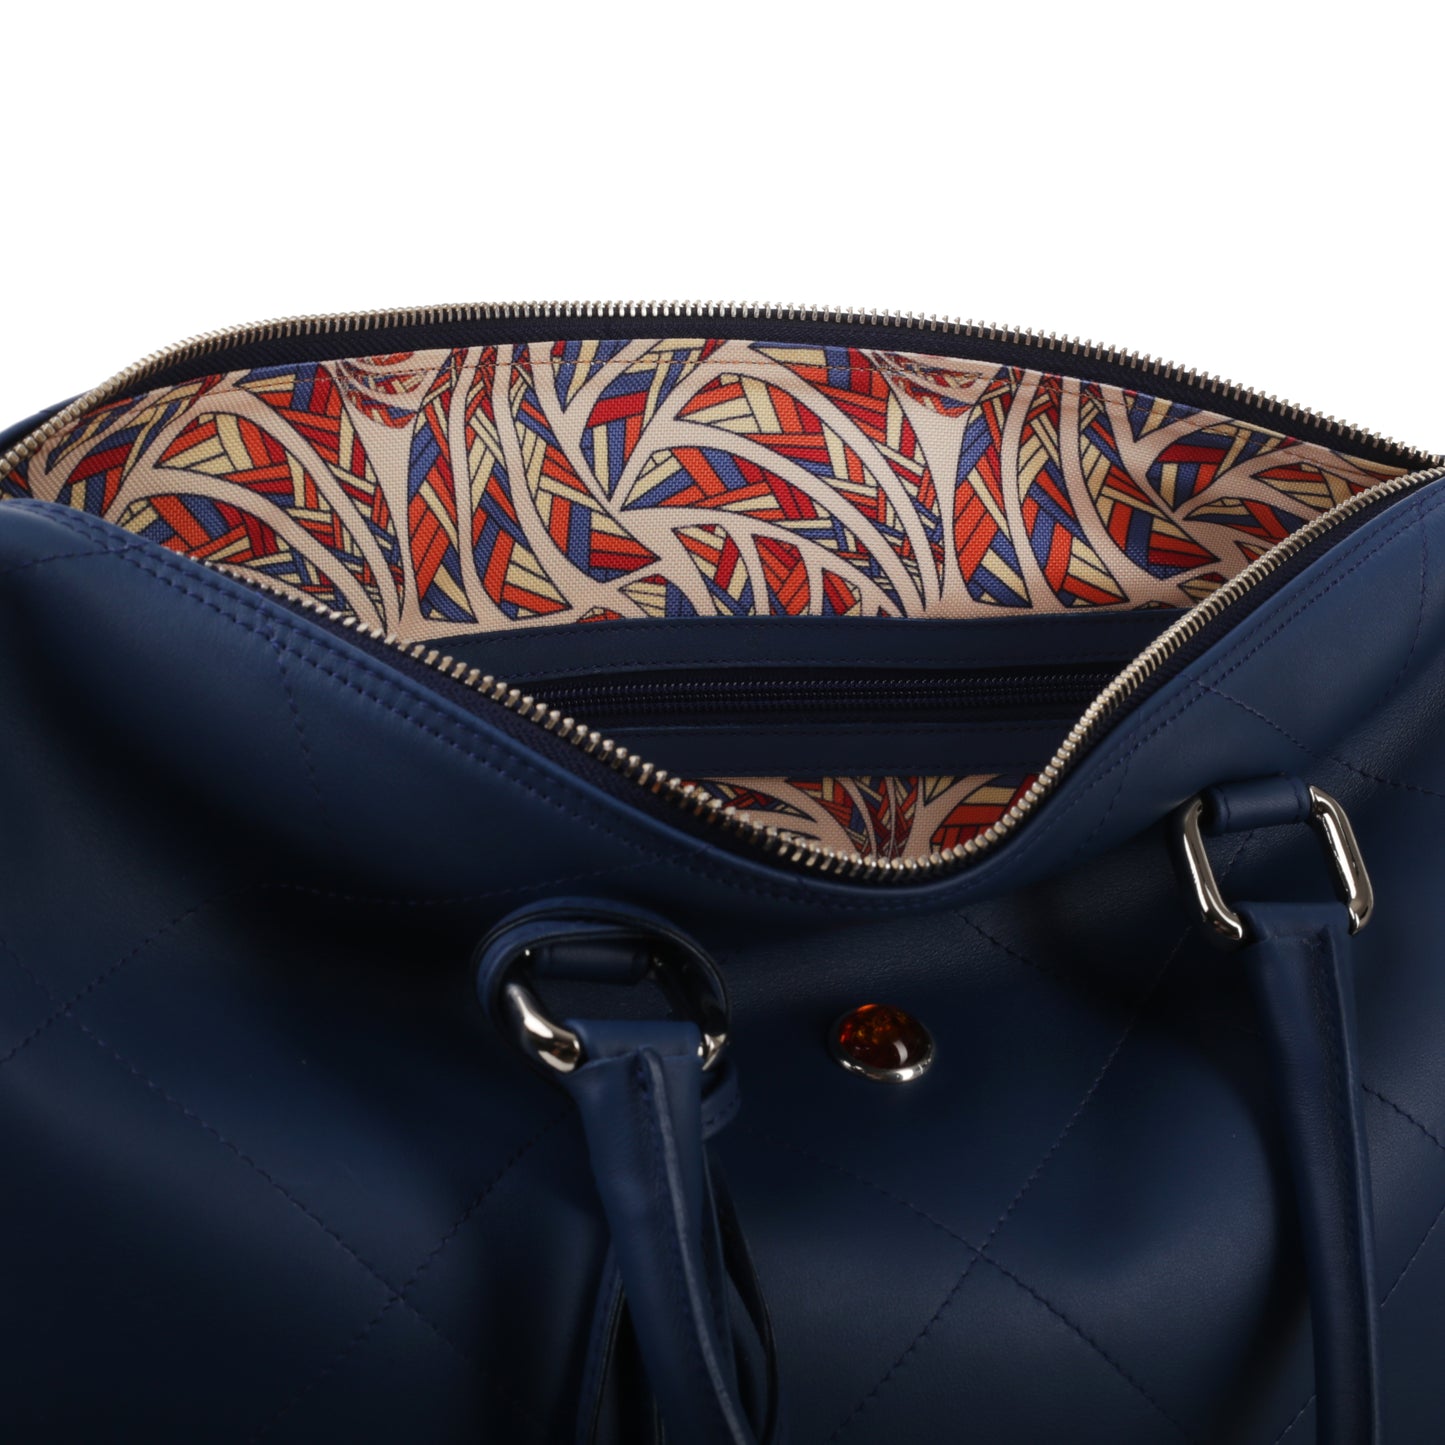 HERRA NAPA NAVY women's leather handbag